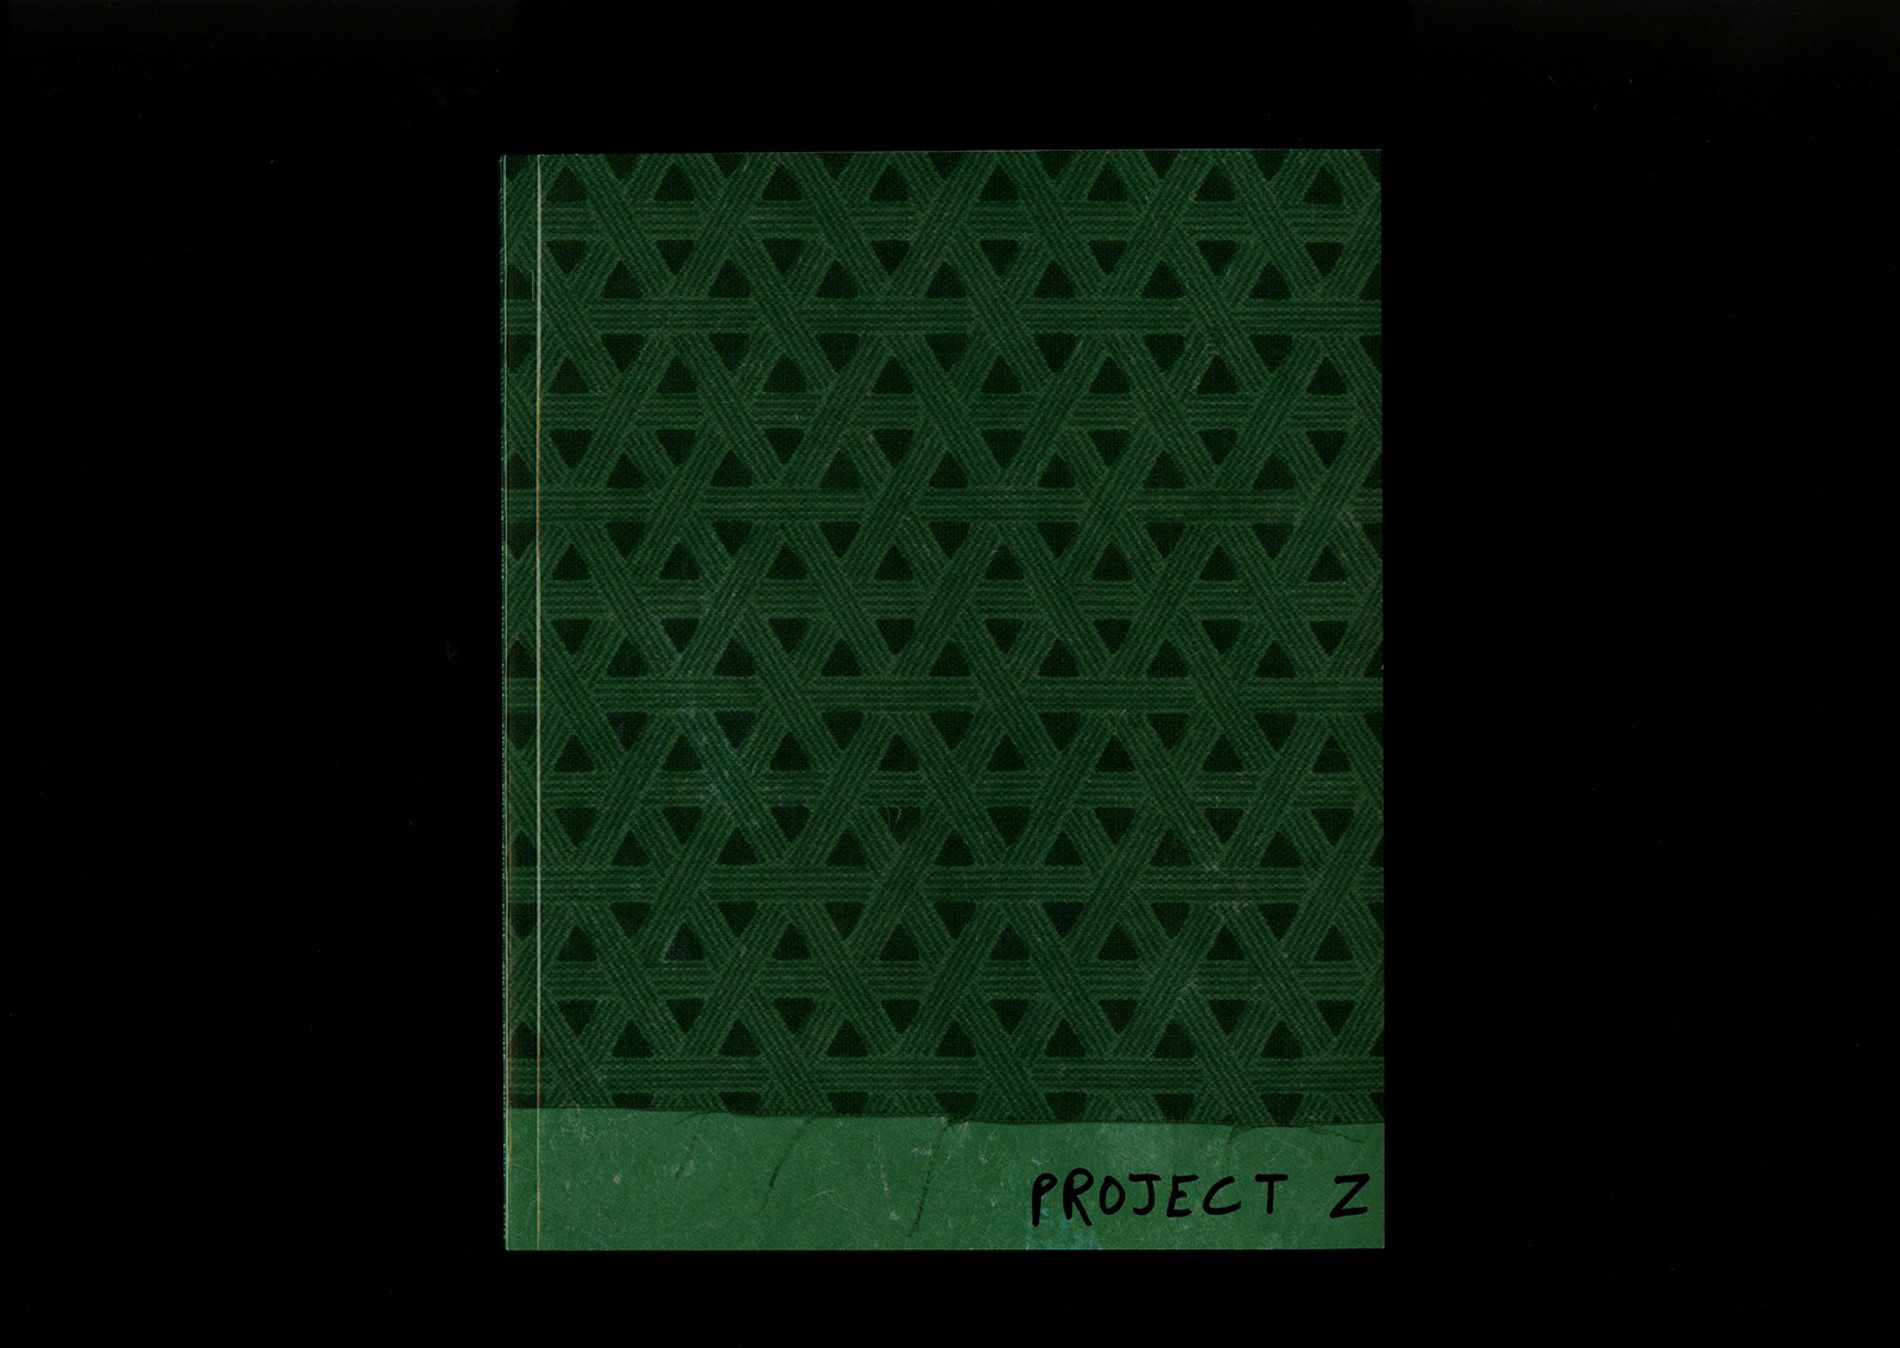 Open Projects Press Project Z